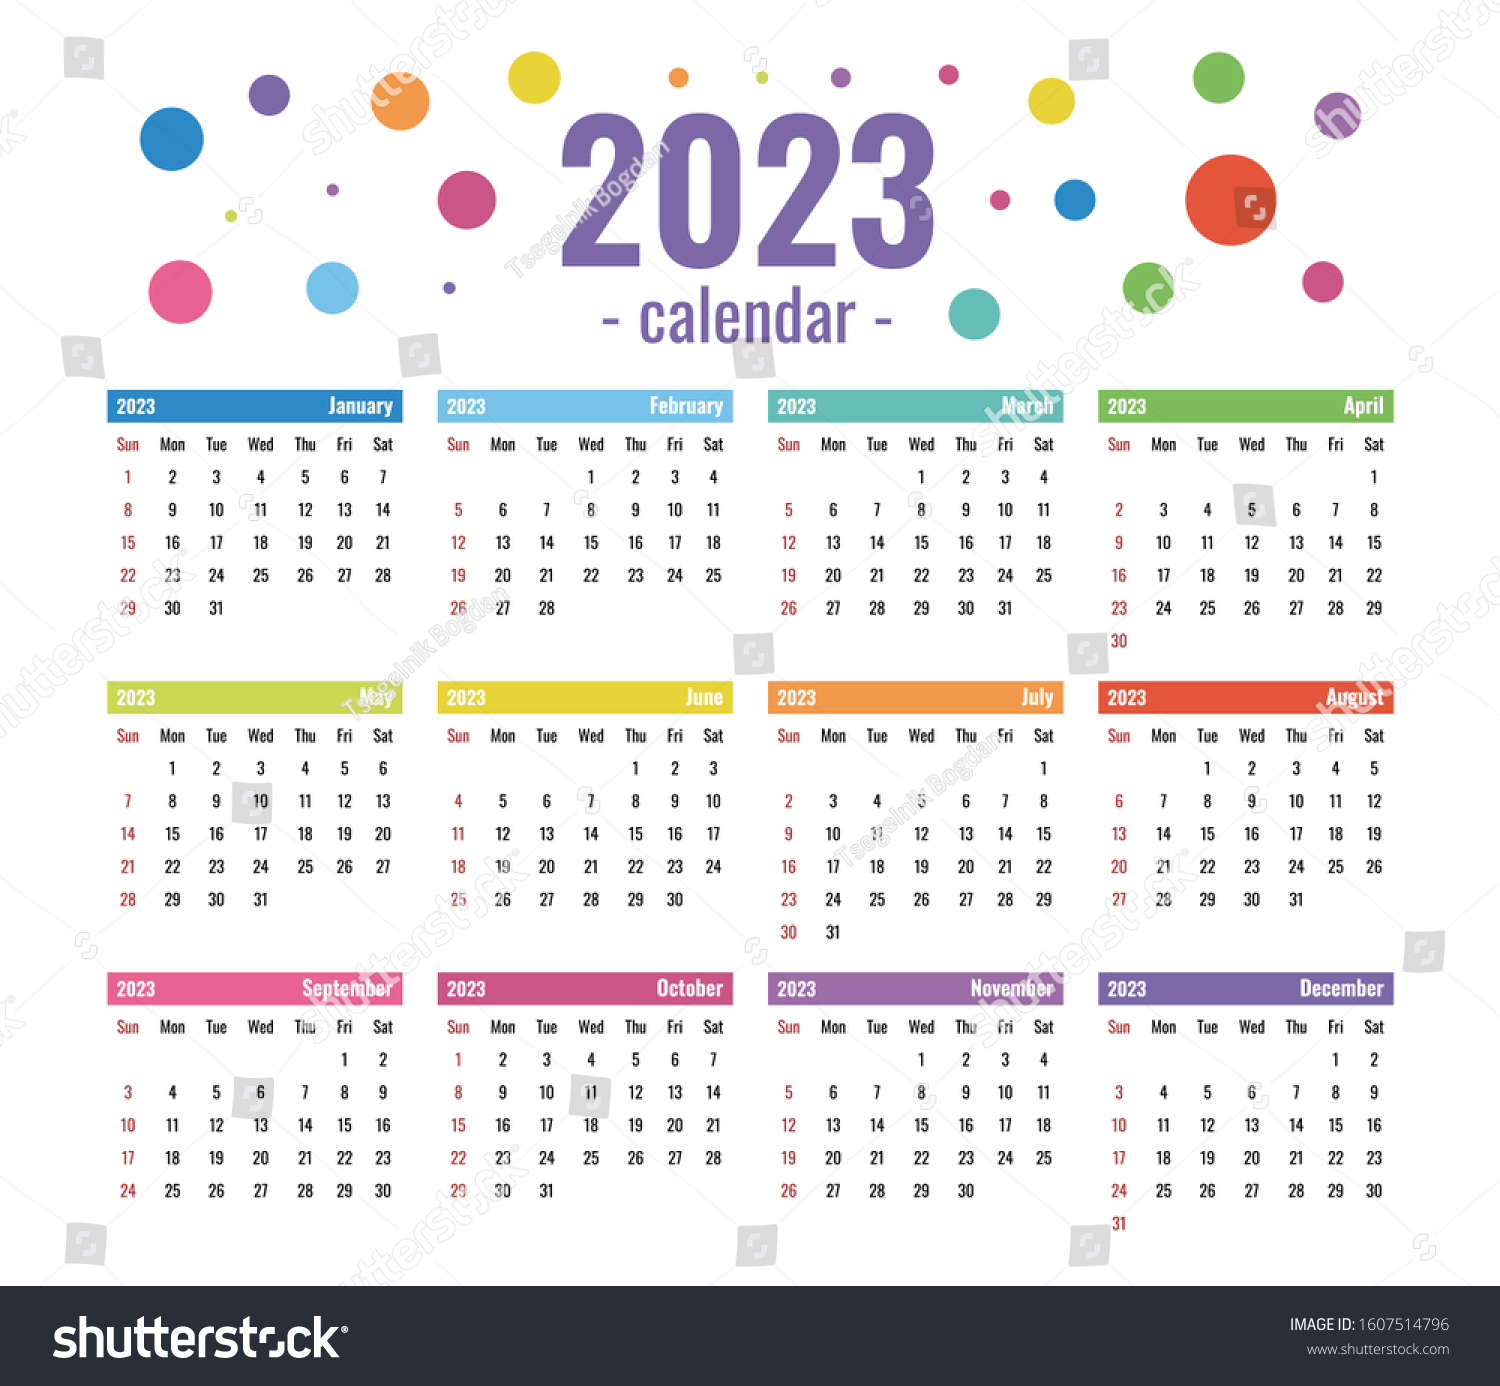 Spring 2023 Utd Calendar Recette 2023